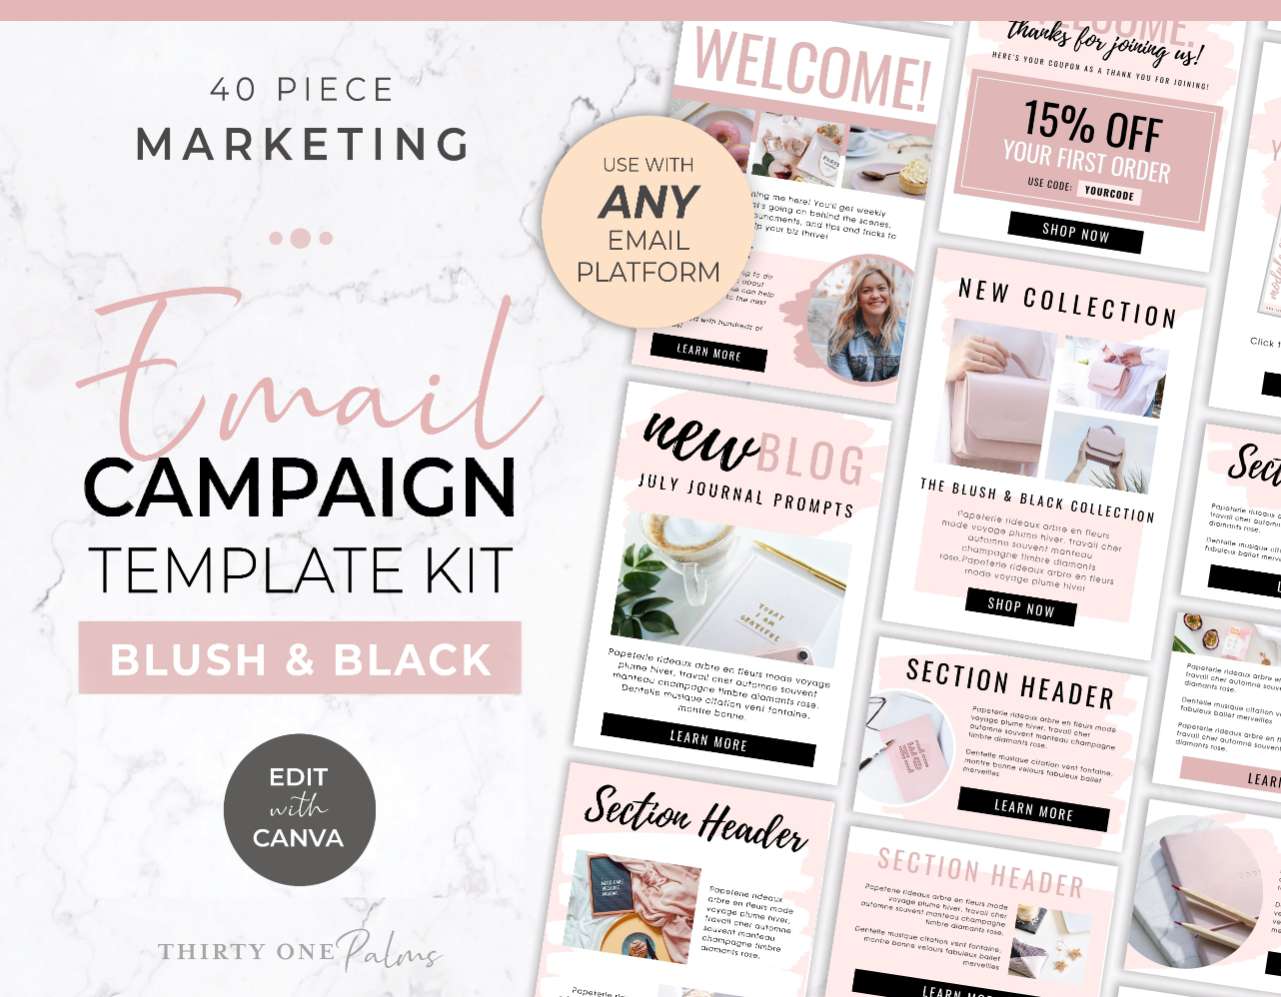 Email Marketing Campaign Template Kit - Blush & Black